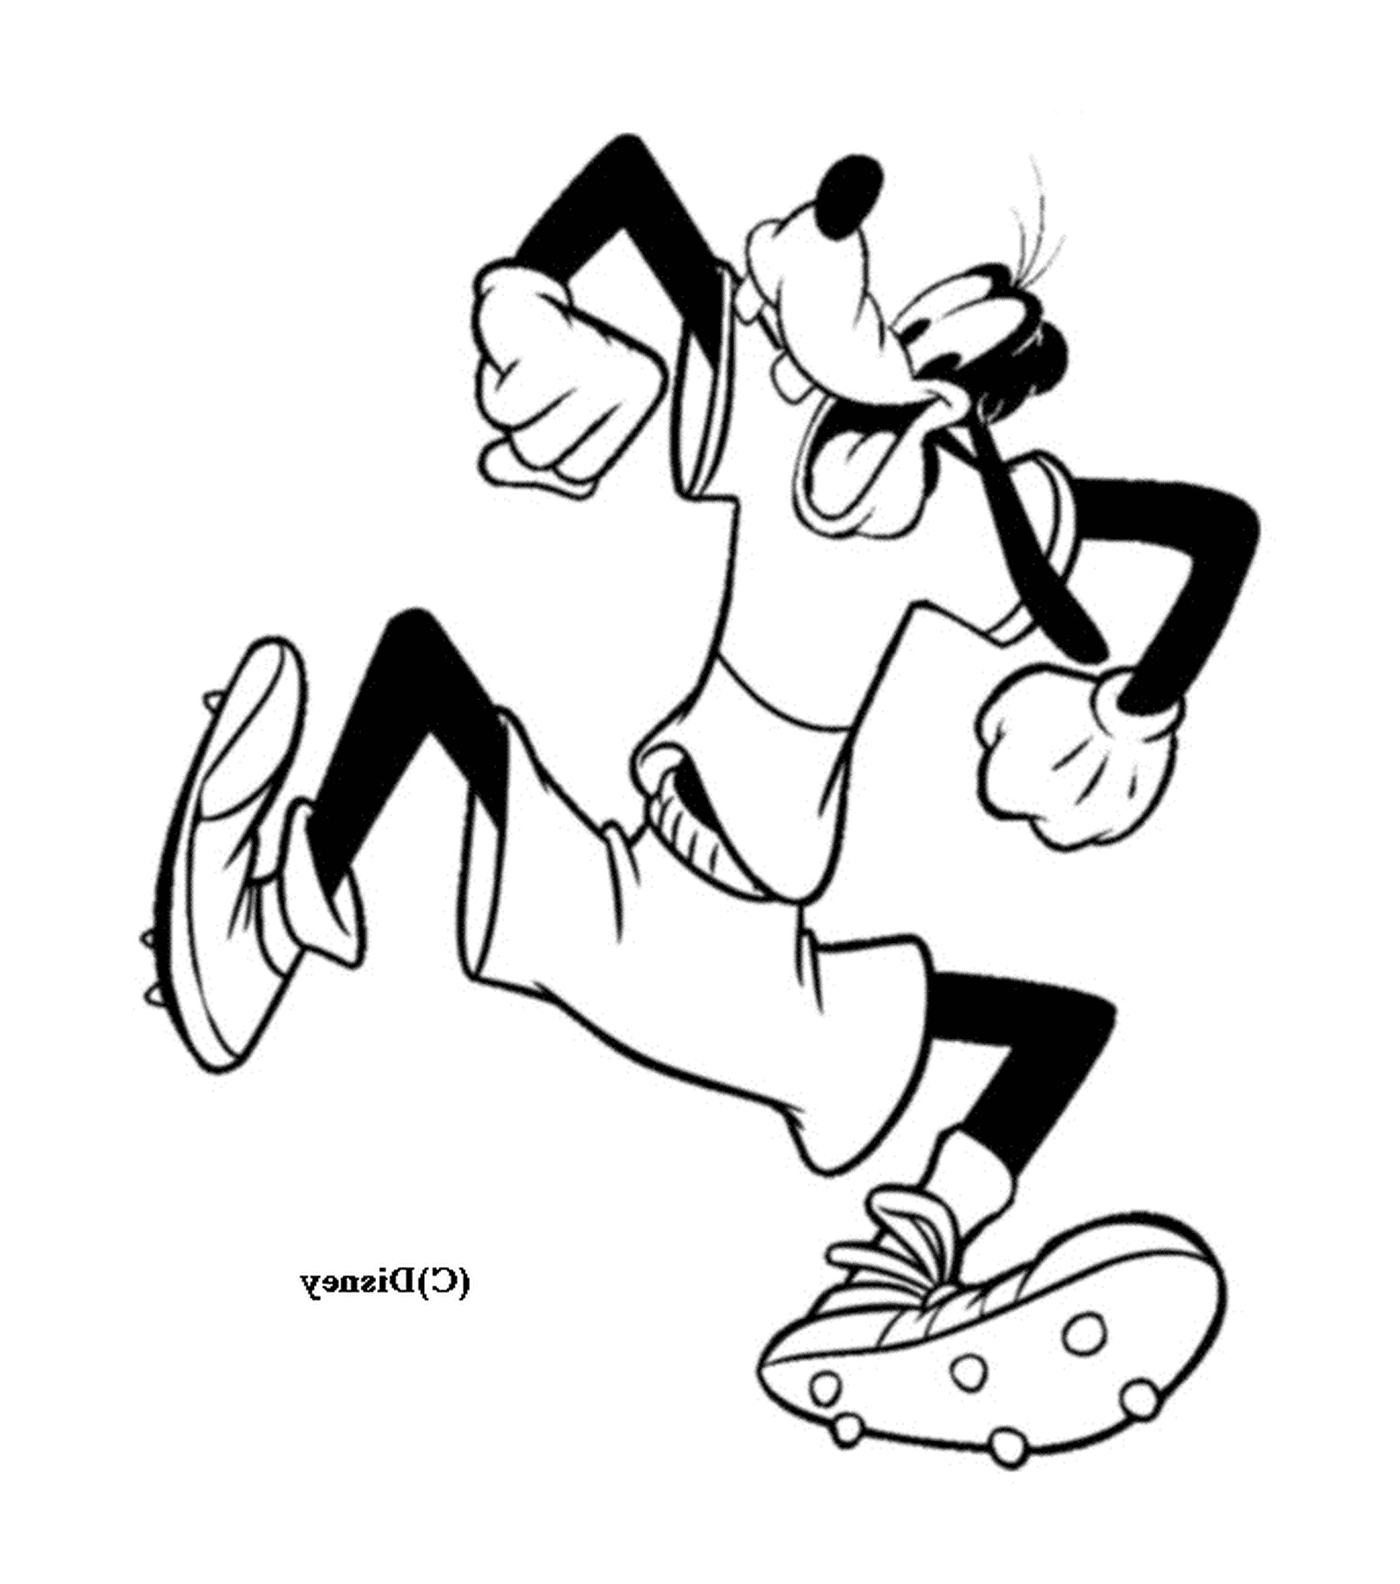  Dingo runs by wearing shorts 